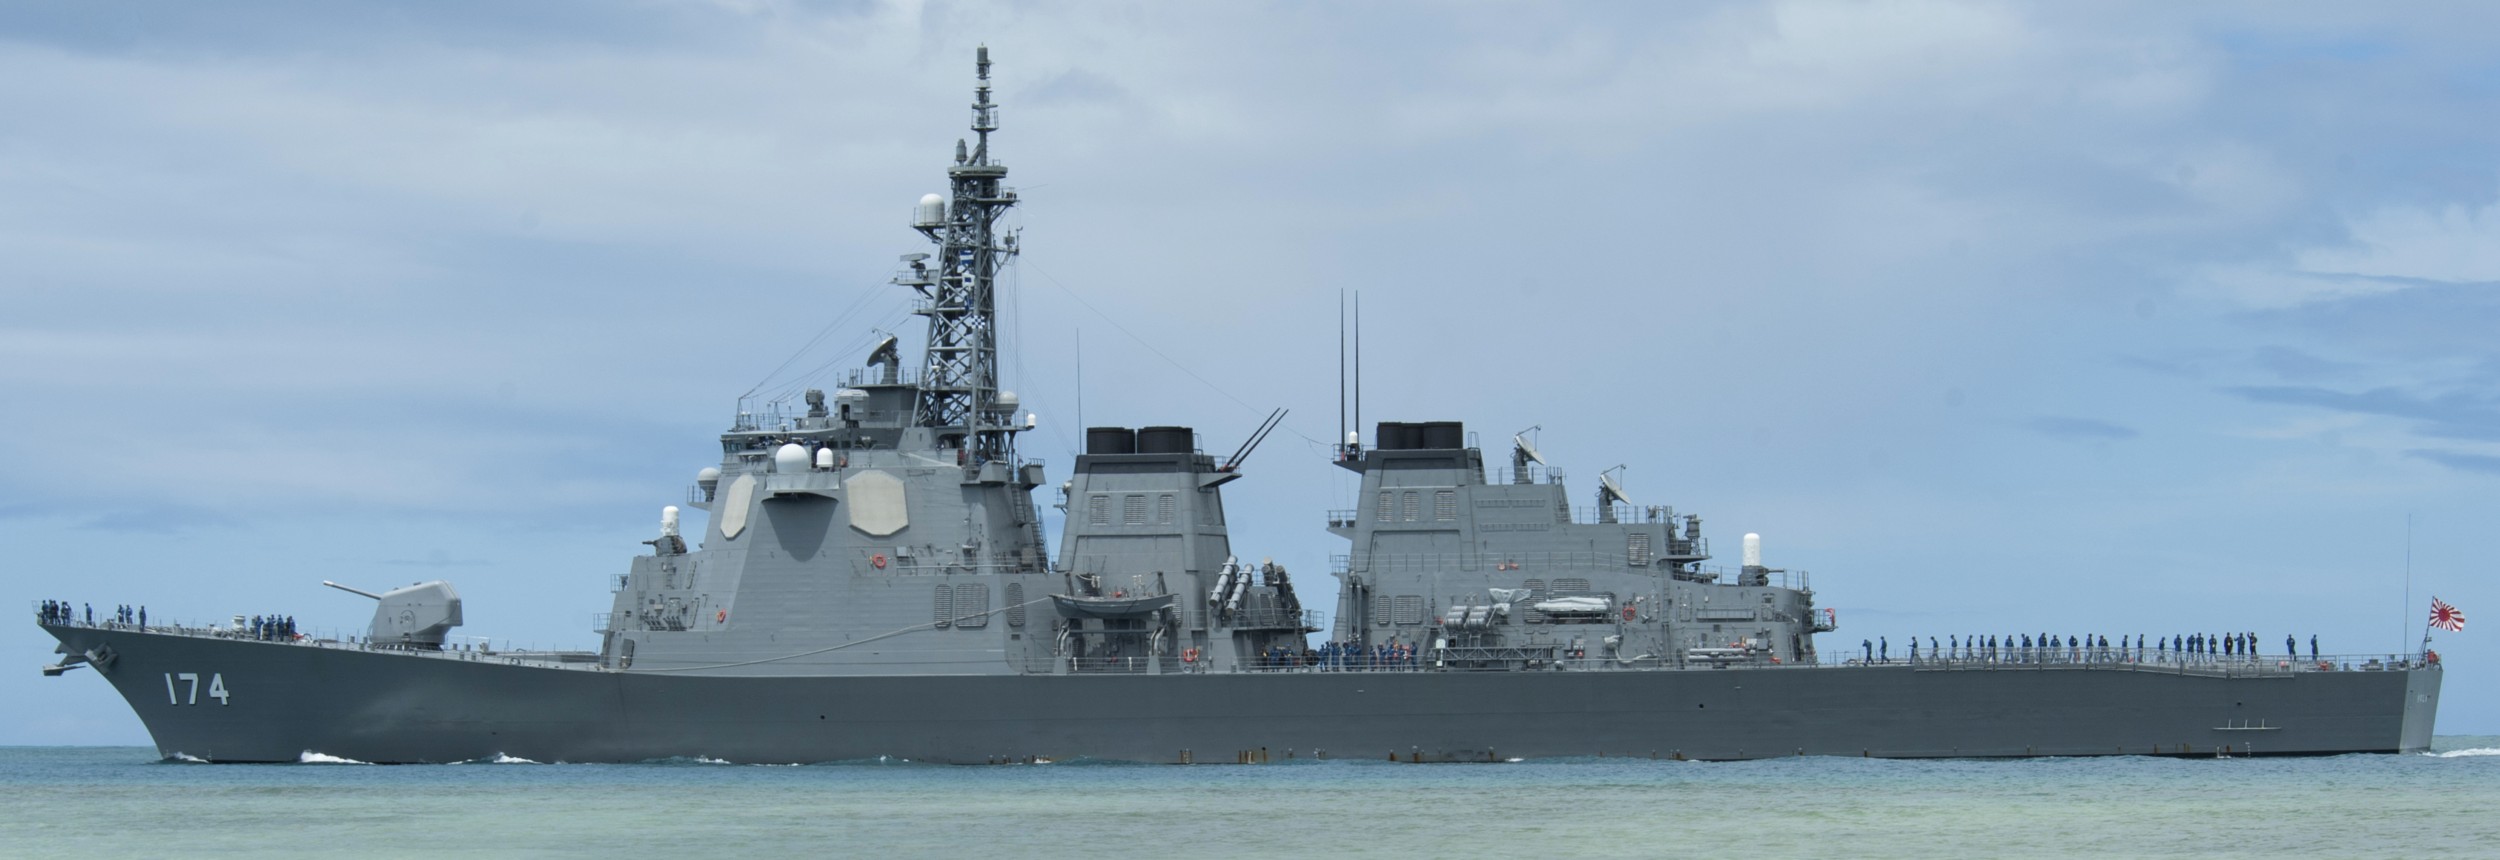 ddg-174 jds kirishima kongou class destroyer japan maritime self defense force jmsdf 35